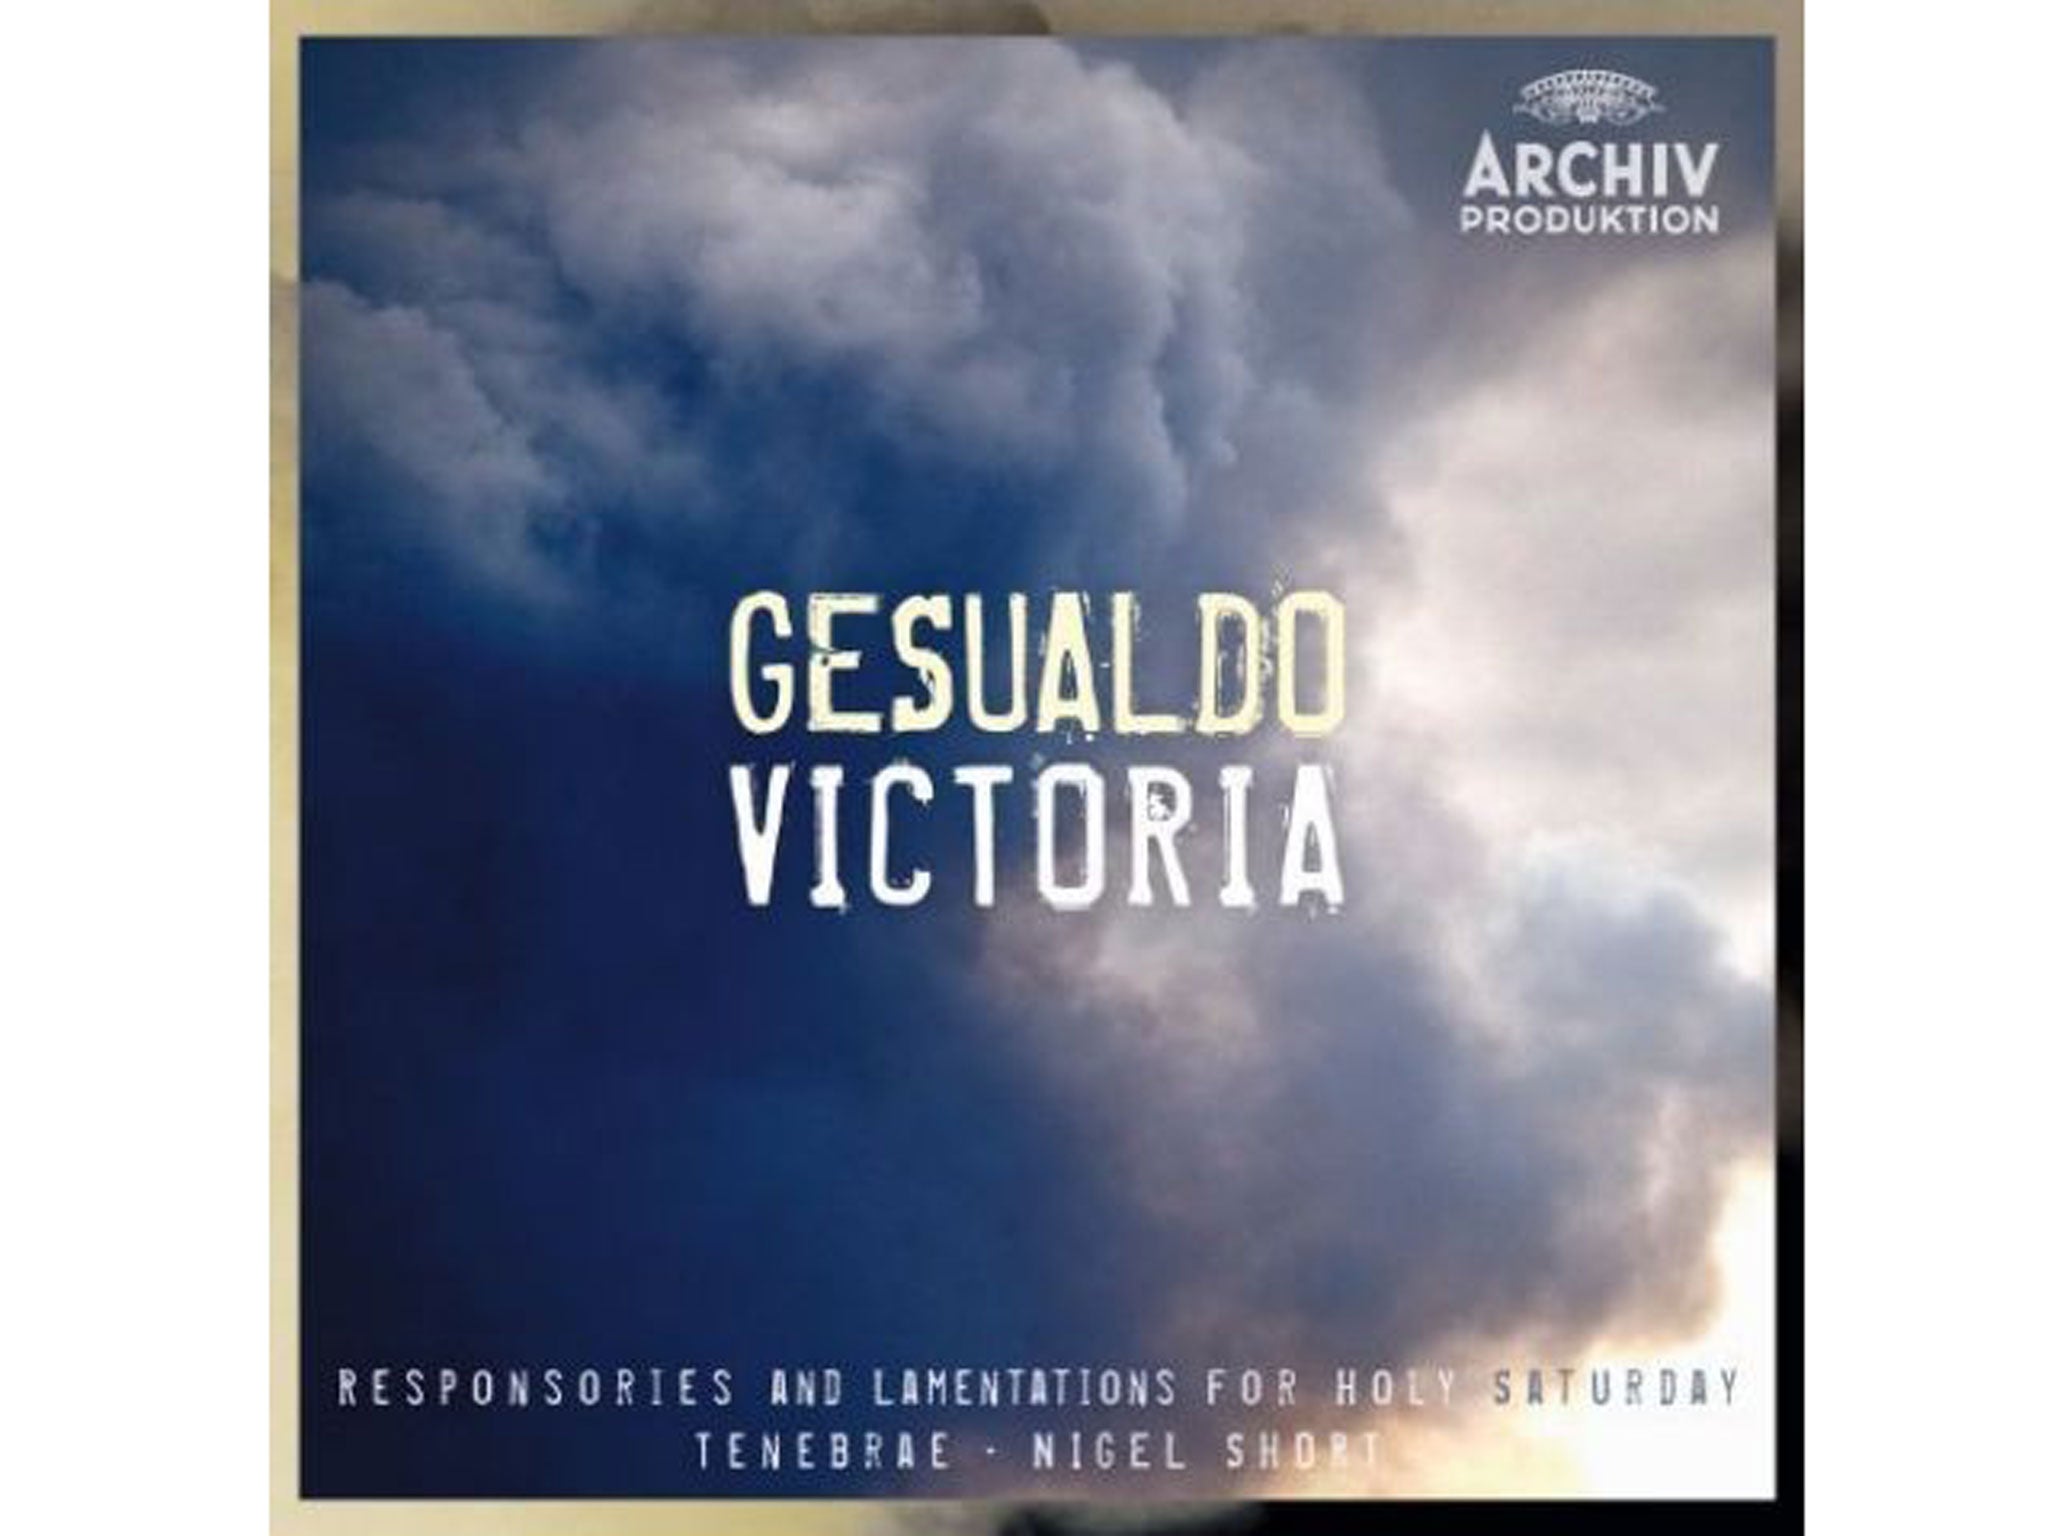 Nigel Short, Tenebrae Gesualdo, Victoria: Responsories and Lamentations for Holy Saturday (Deutsche Grammophon)